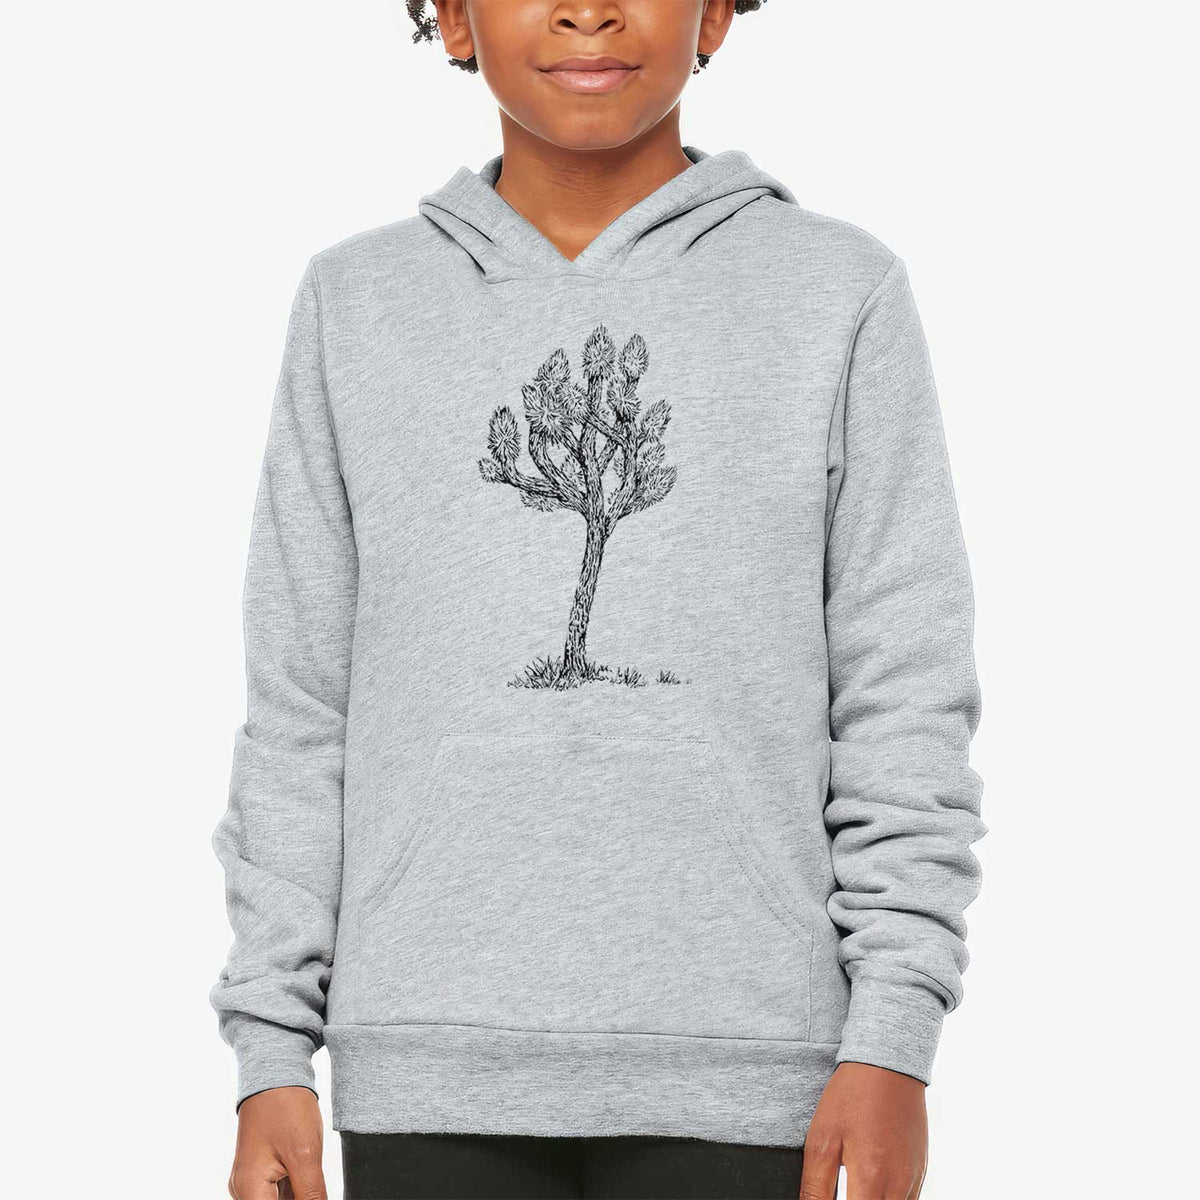 Yucca brevifolia - Joshua Tree - Youth Hoodie Sweatshirt